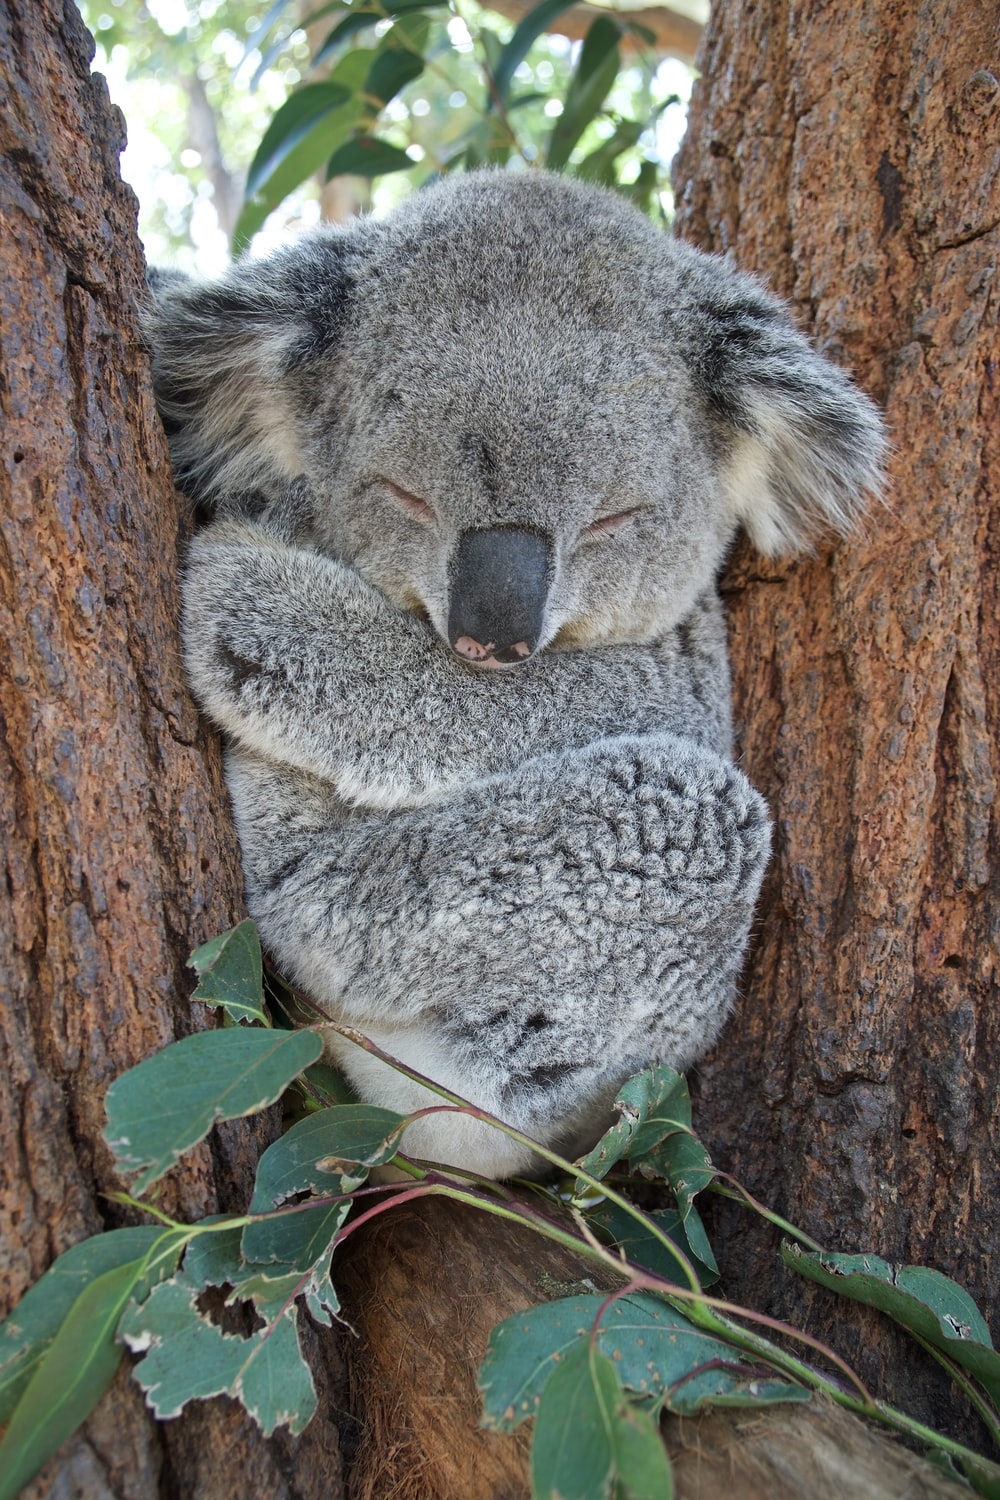 Picture of a koala sleeping in a tree.